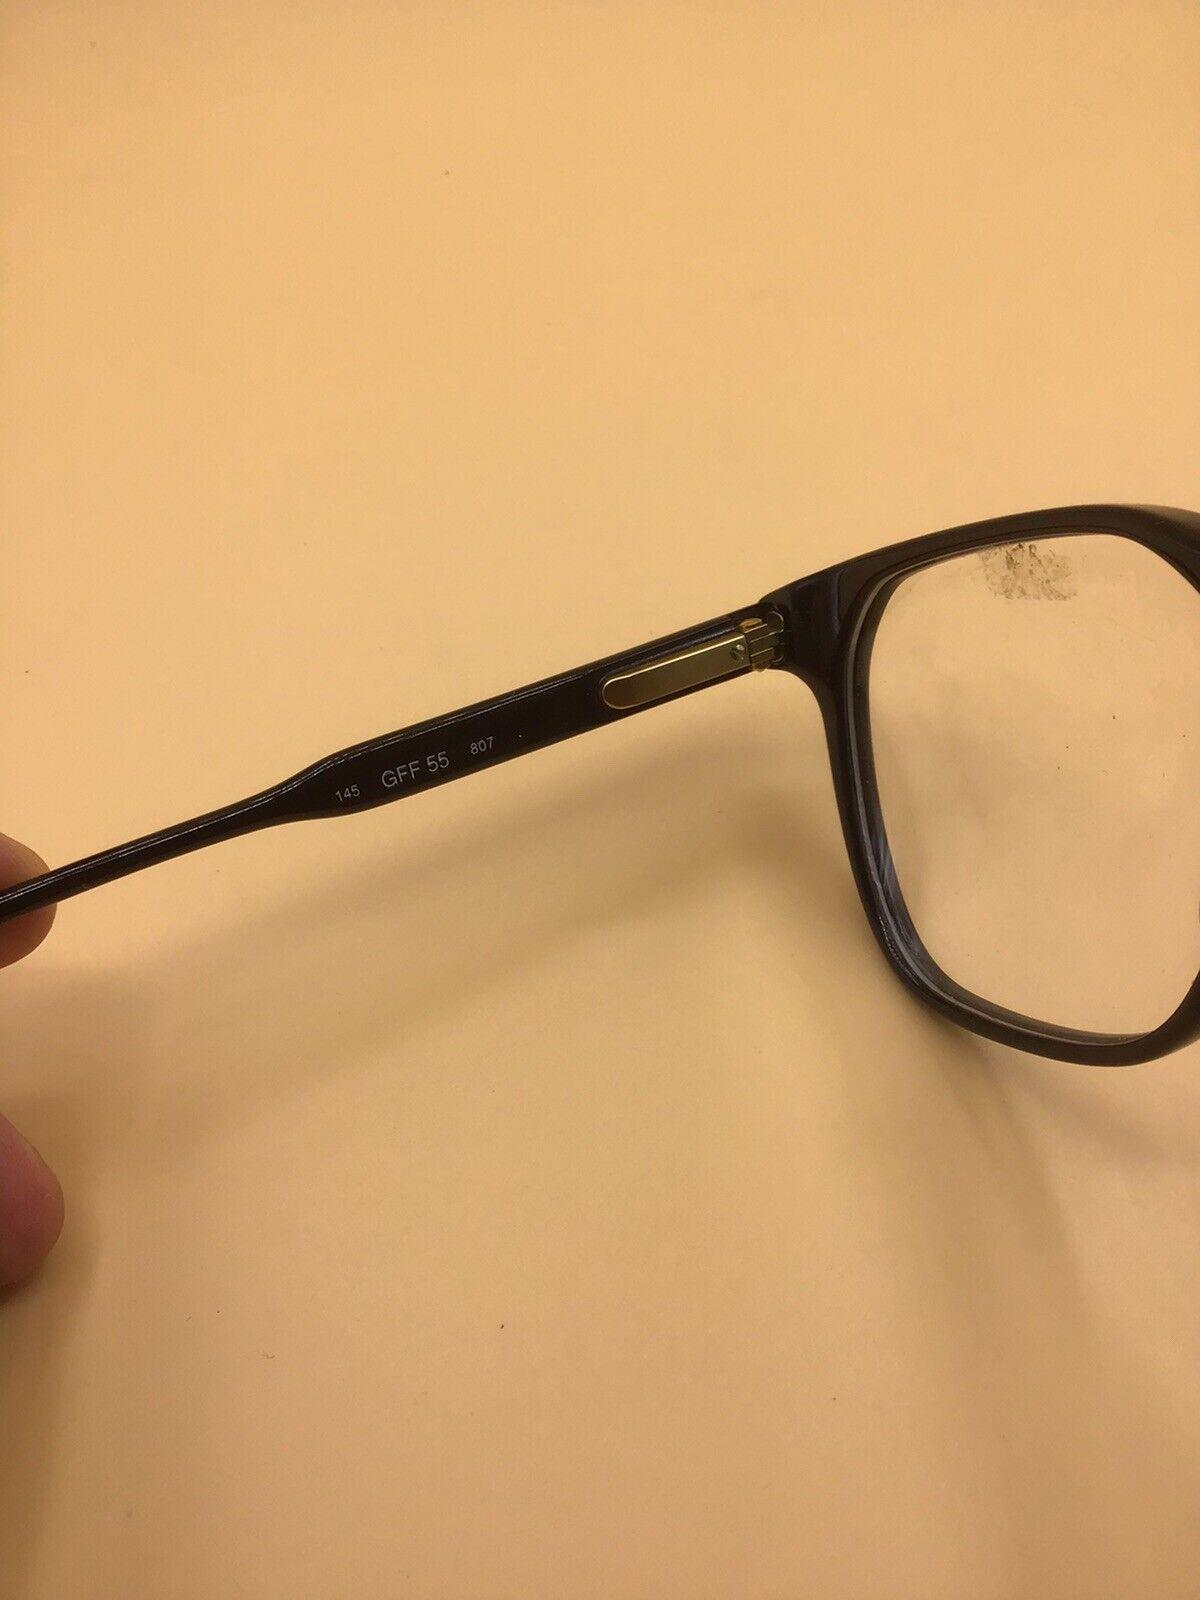 Gianfranco Ferre occhiale vintage eyewear frame brillen lunettes GFF 55 807